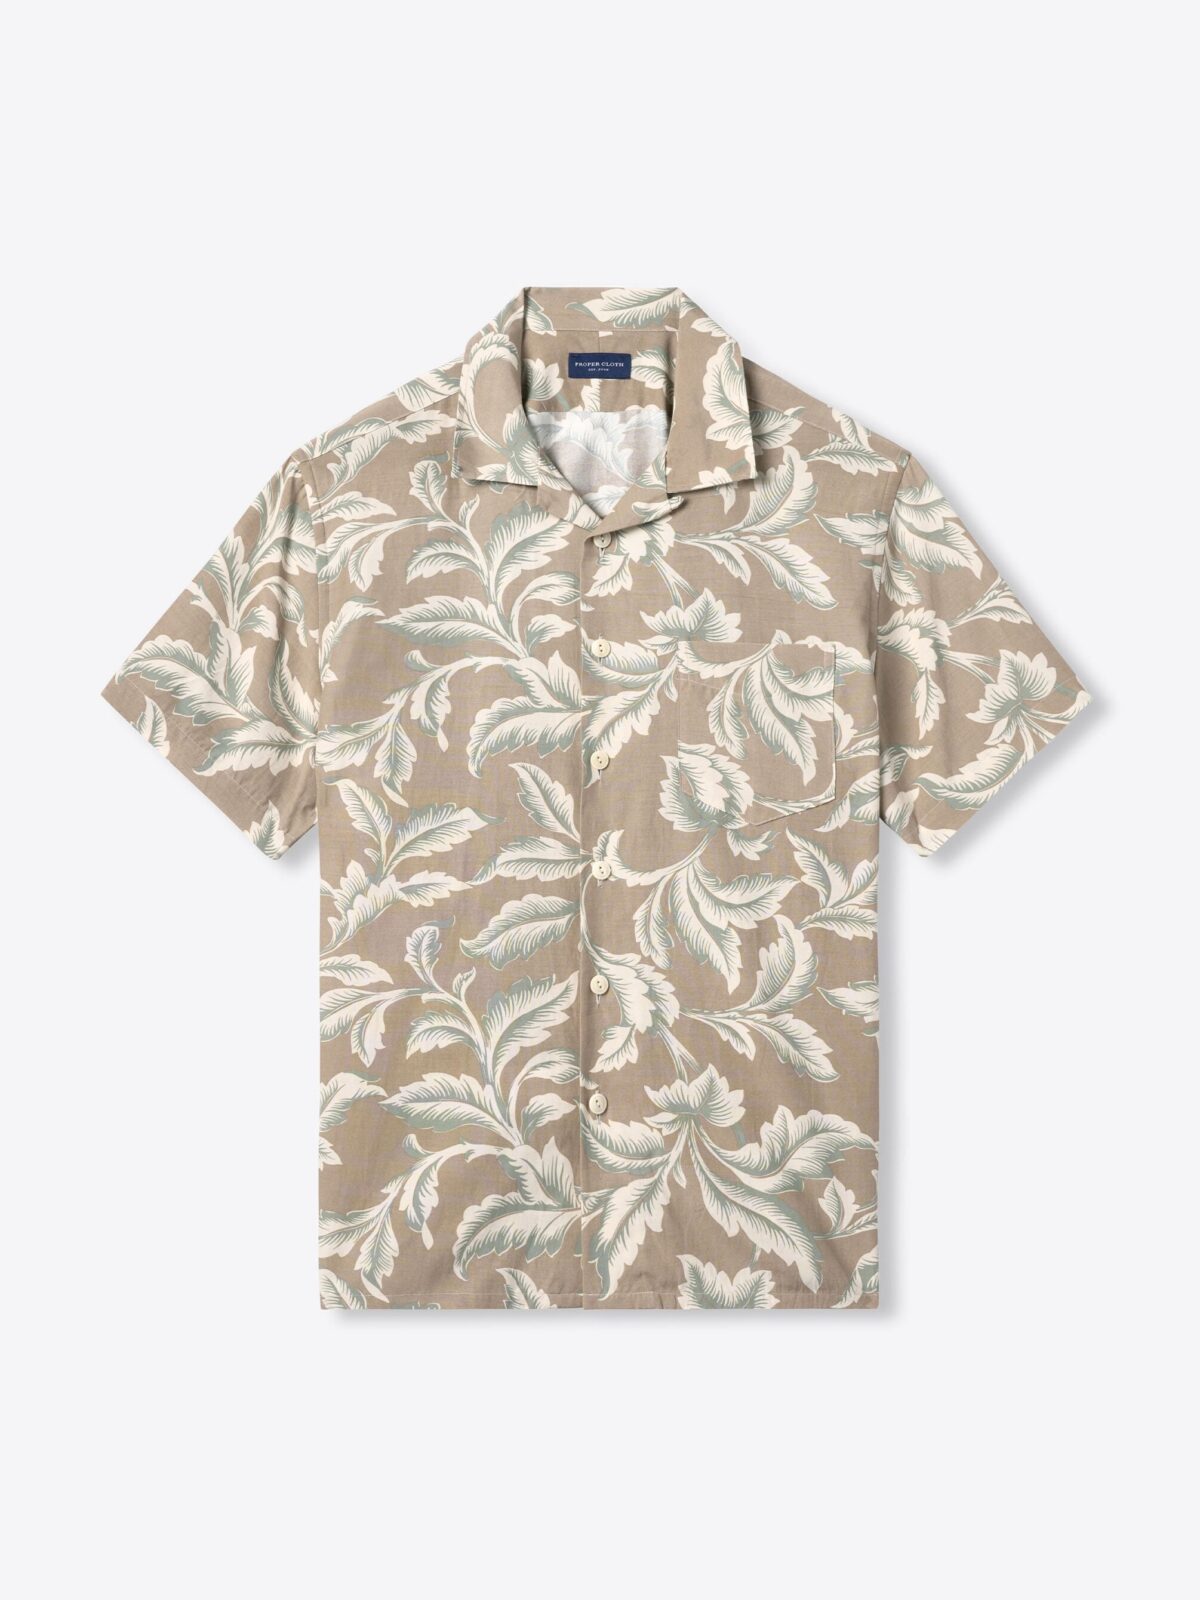 Japanese Sienna Rayon Blend Aloha Print Shirt by Proper Cloth